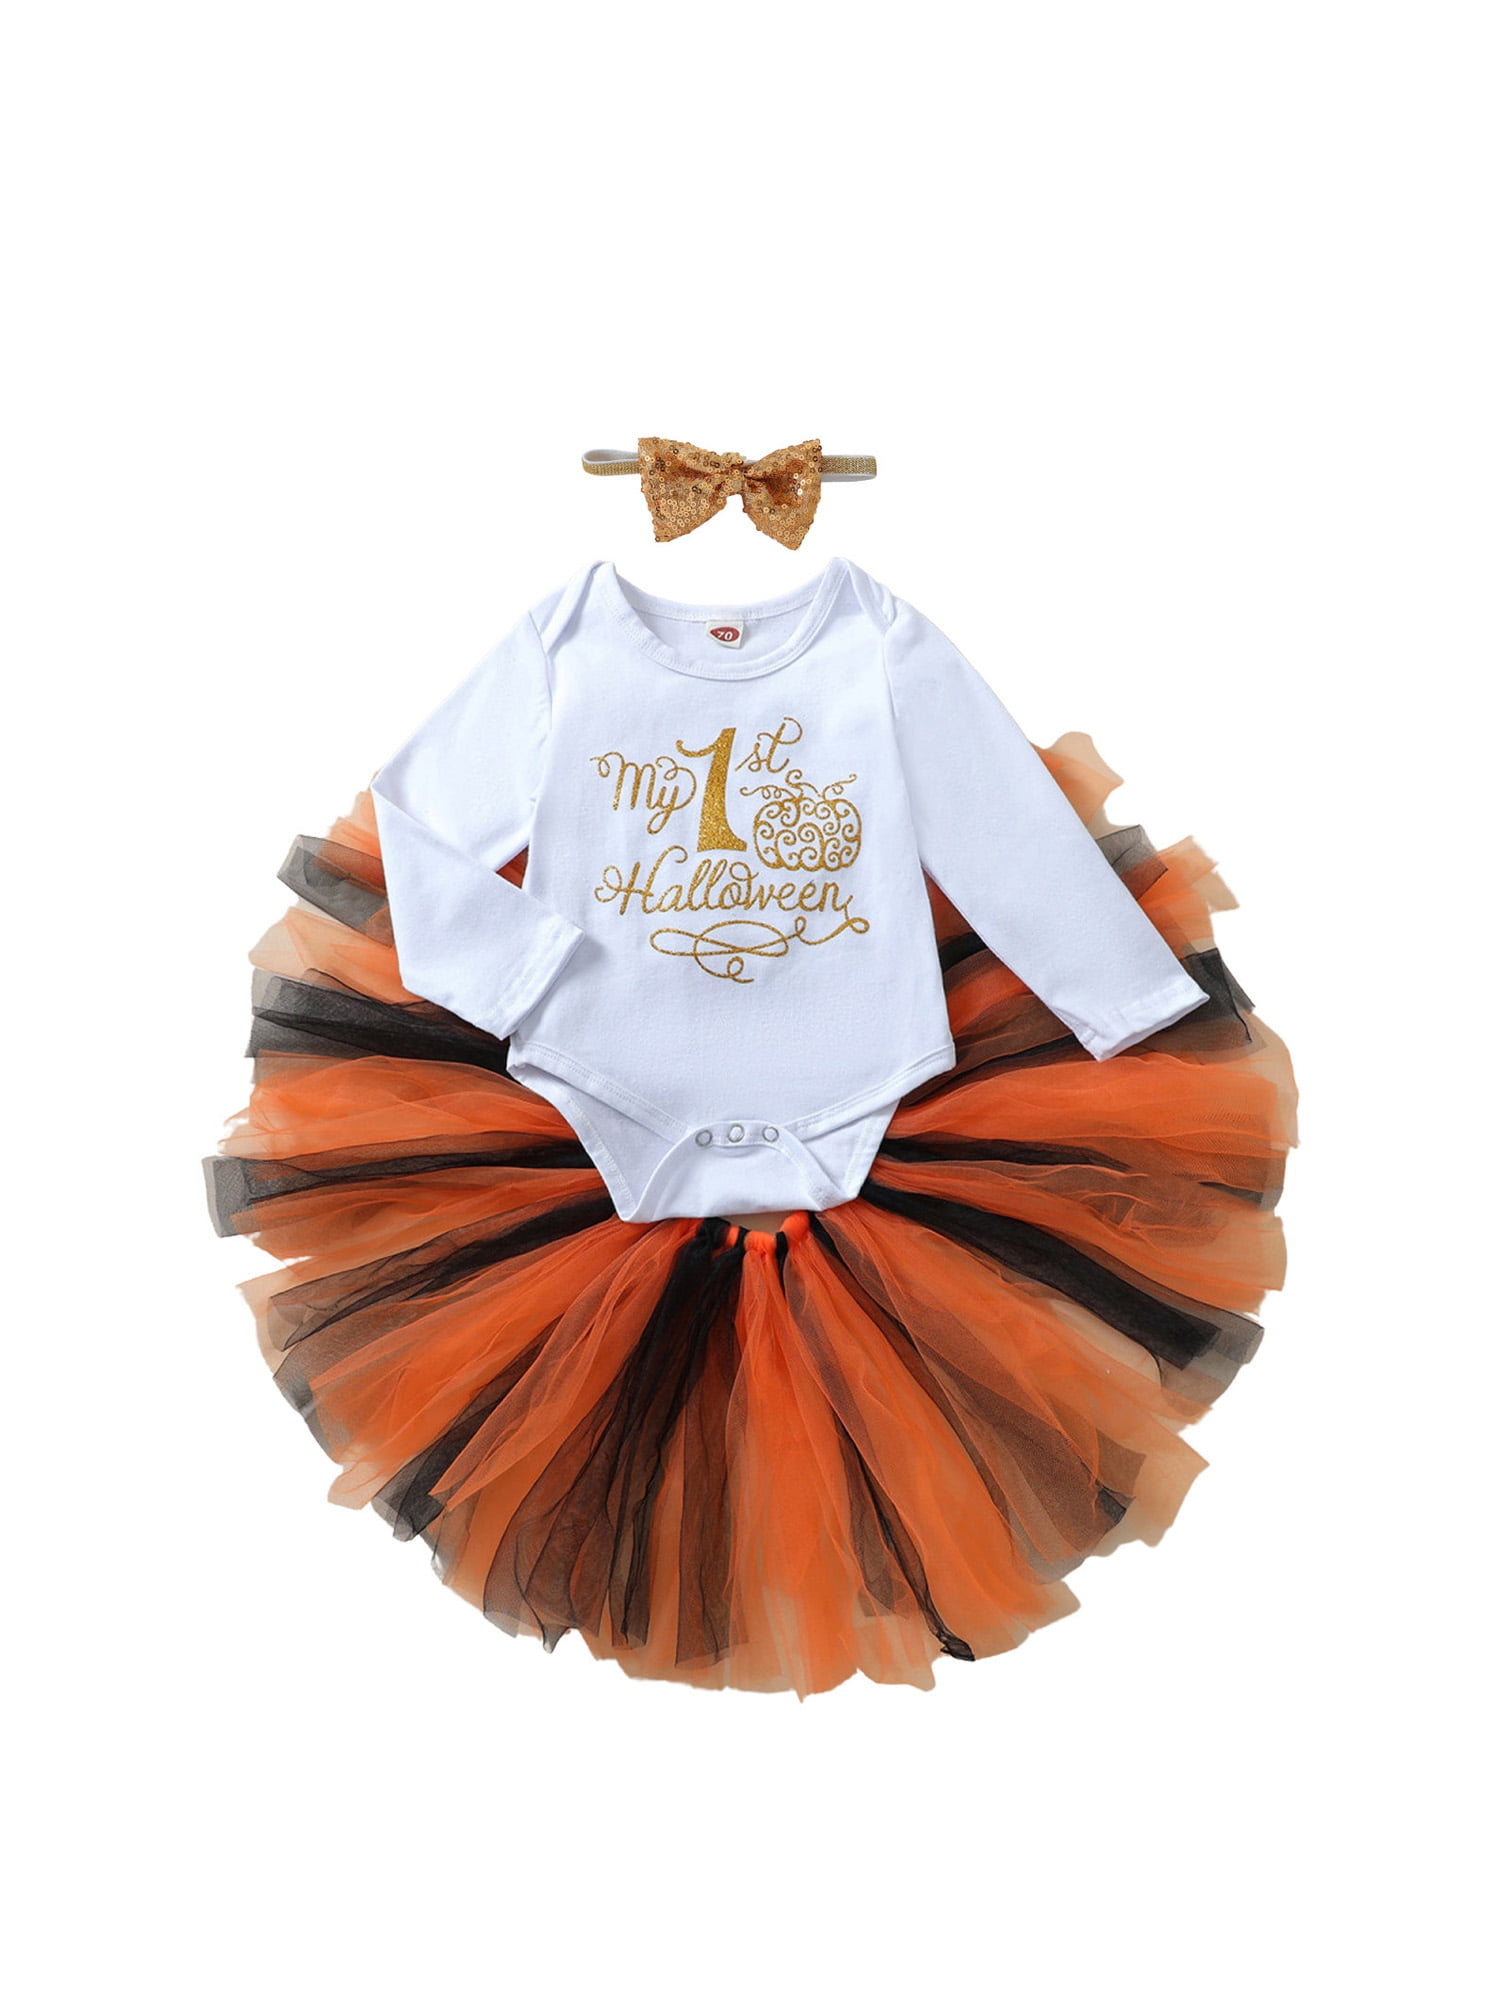 Details about   Newborn Infant Baby Girls Halloween Print Romper+Tutu Skirt Costume Outfits Set 